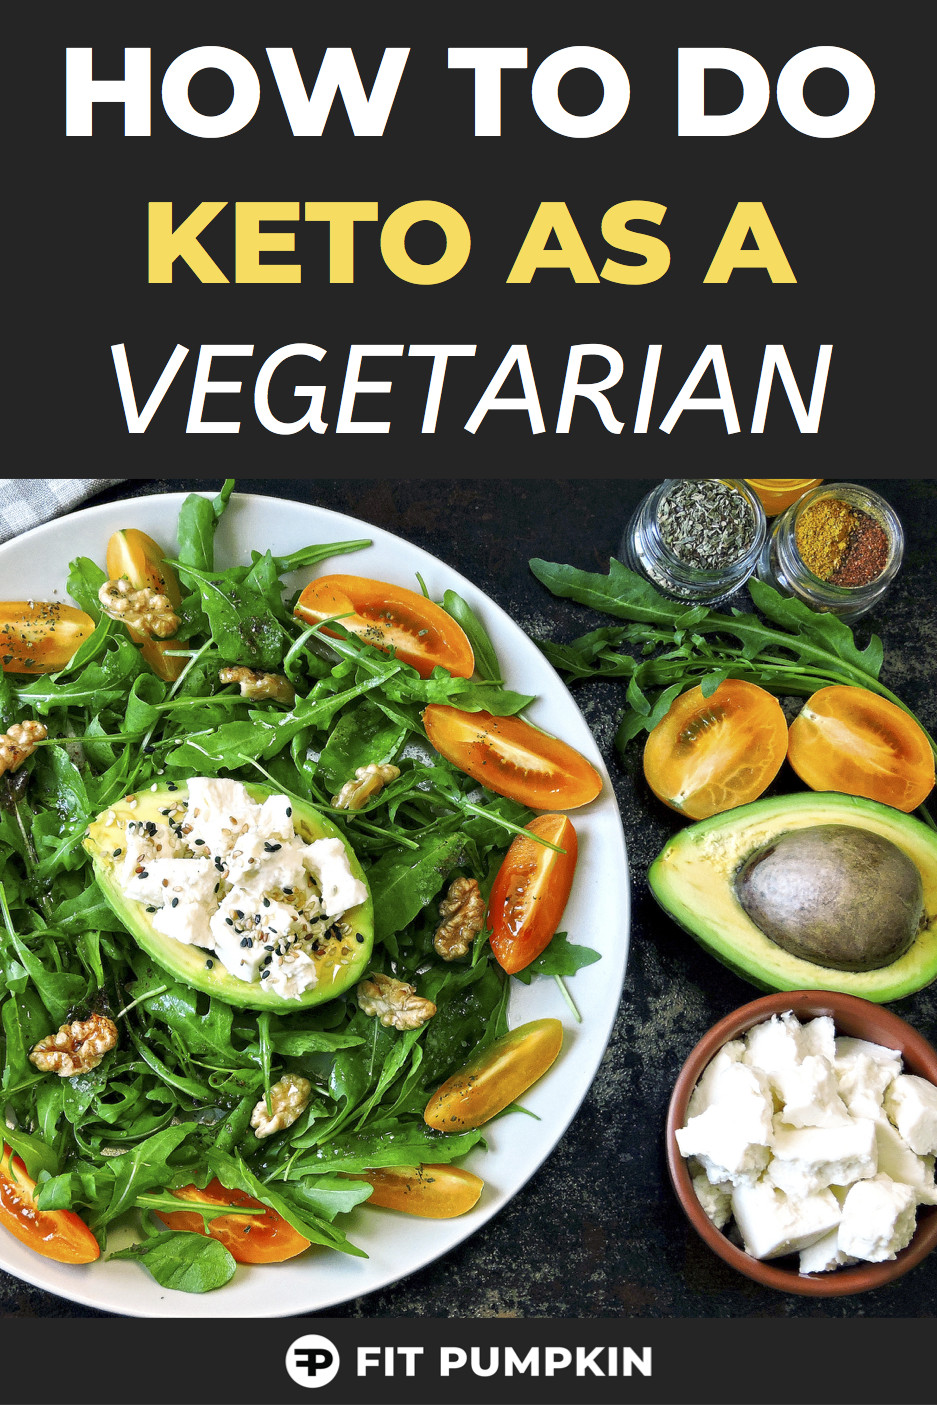 Keto Diet For Beginners Vegetarian Indian
 Ve arian Keto The Ultimate Beginner s Guide